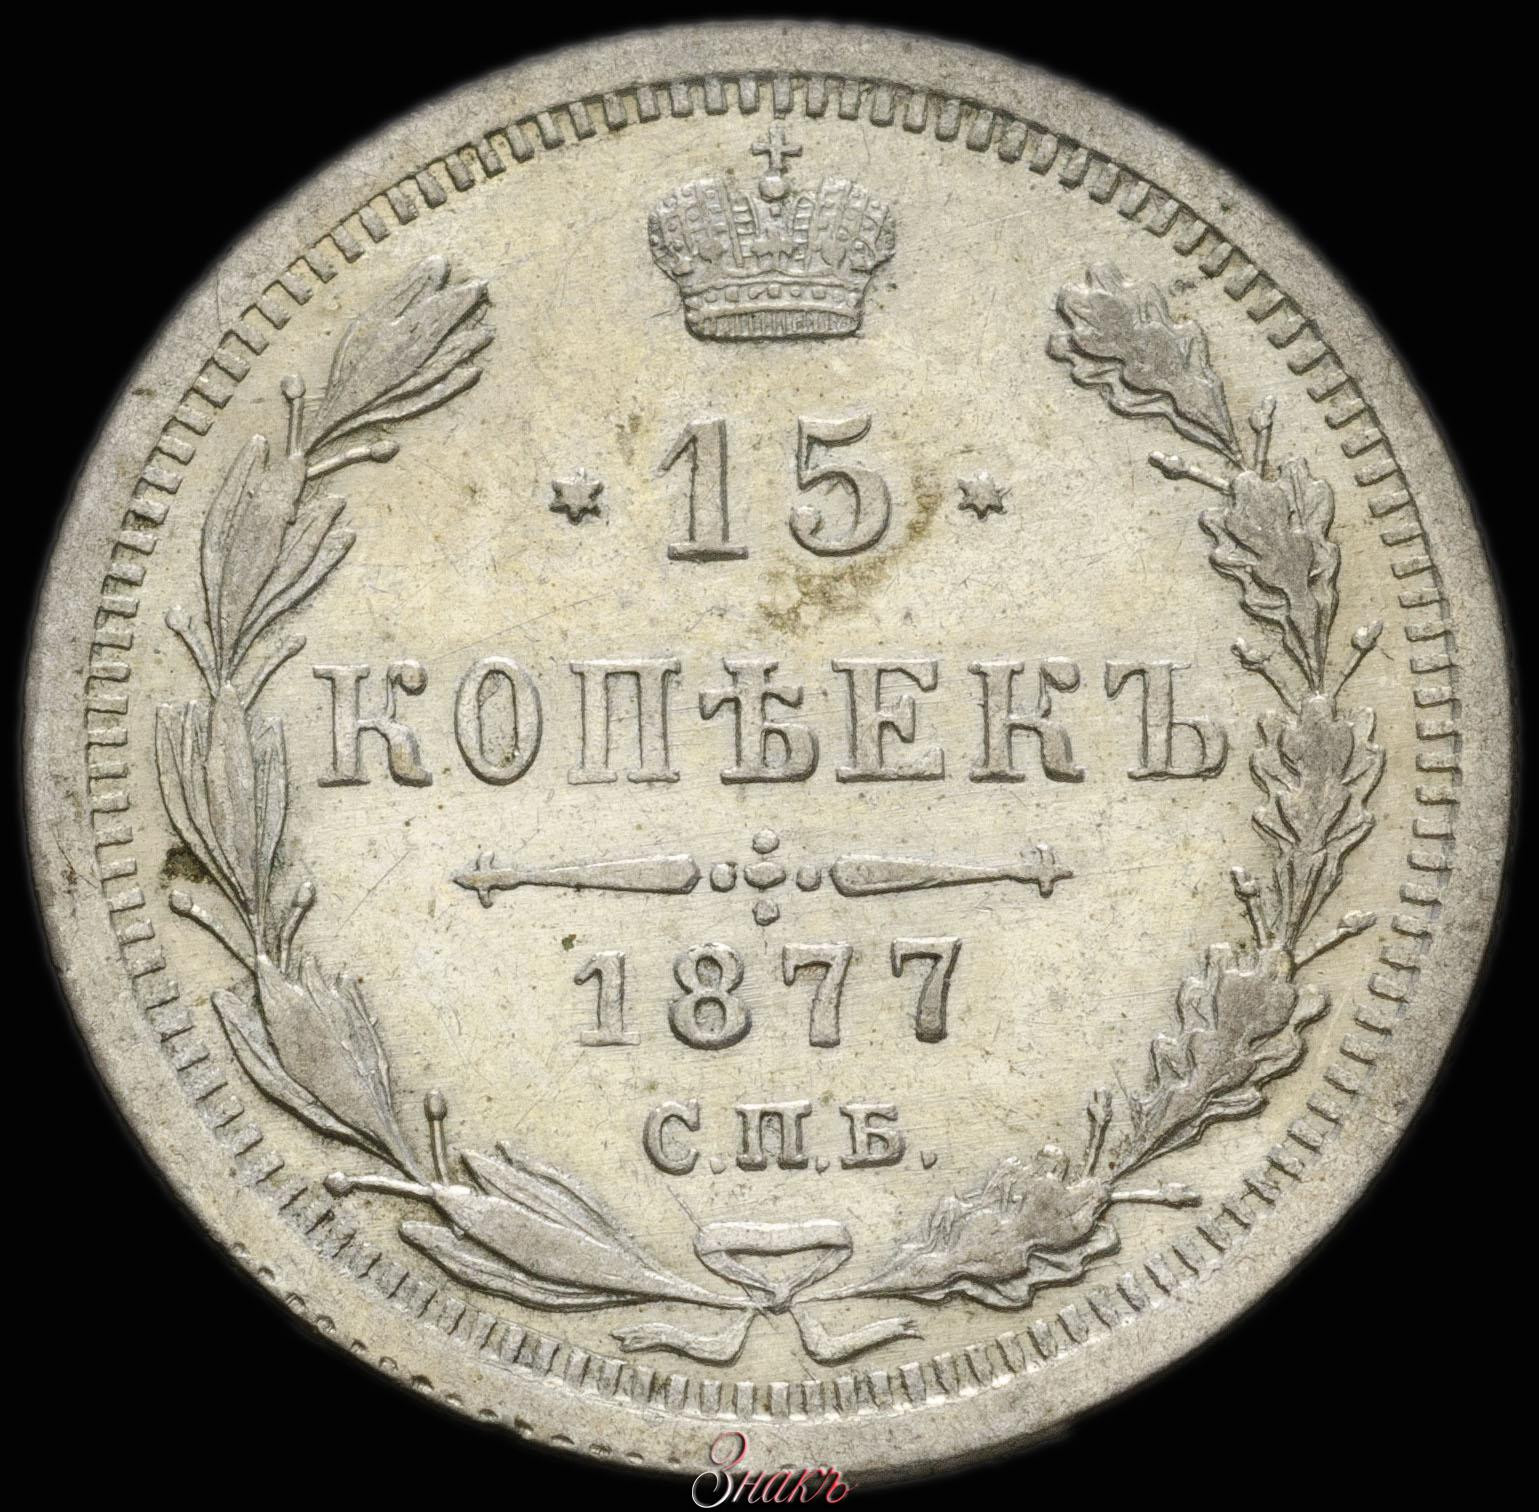 15 копеек 1877 года